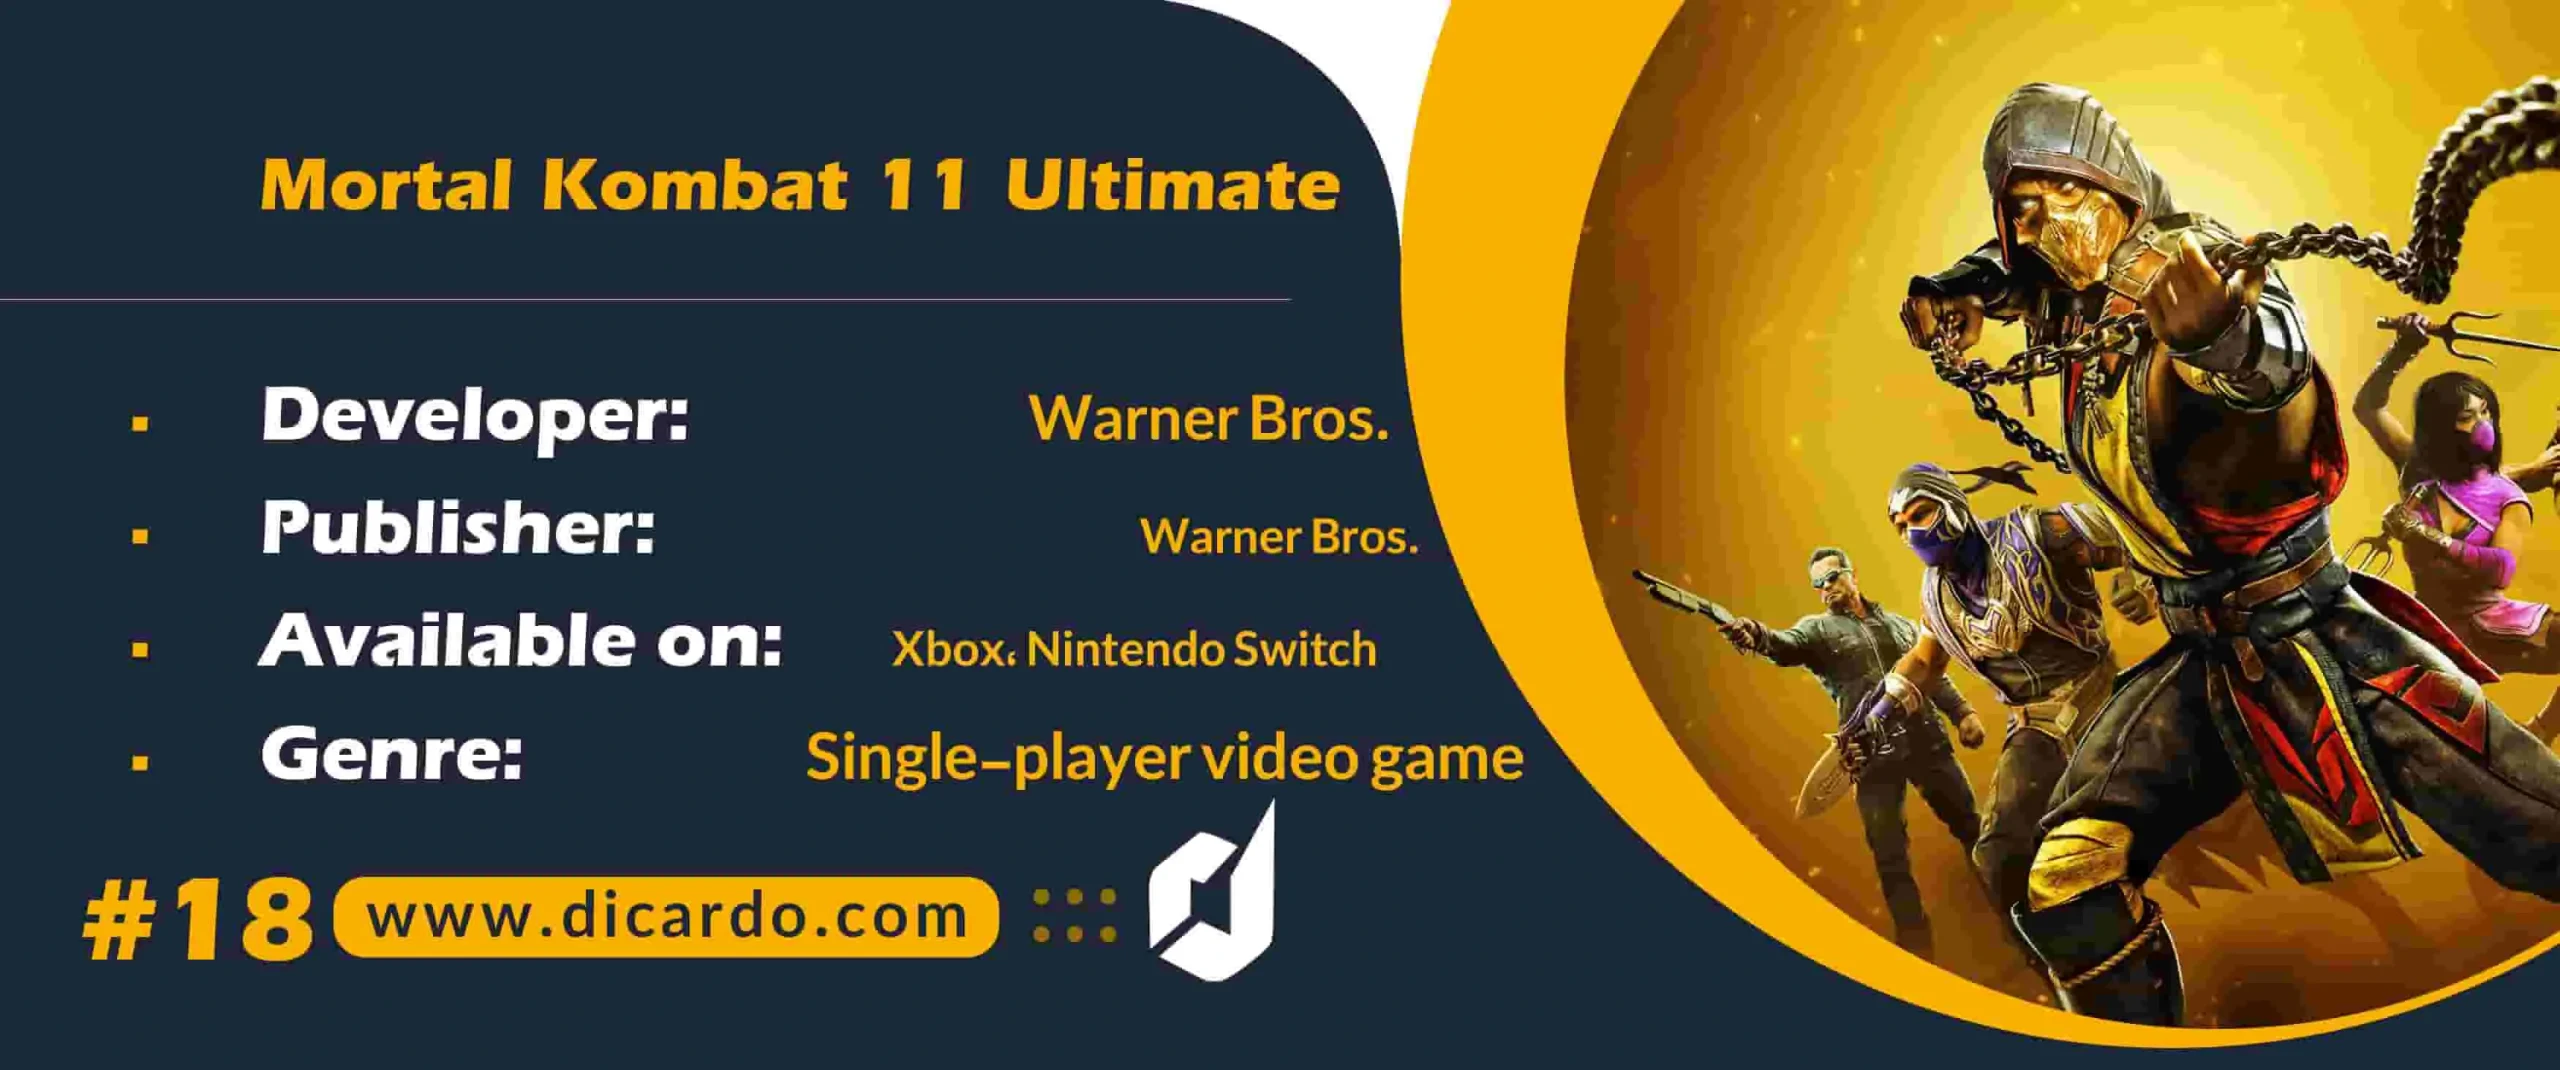 #18 مورتال کمبت 11 آلتیمیت Mortal Kombat 11 Ultimate